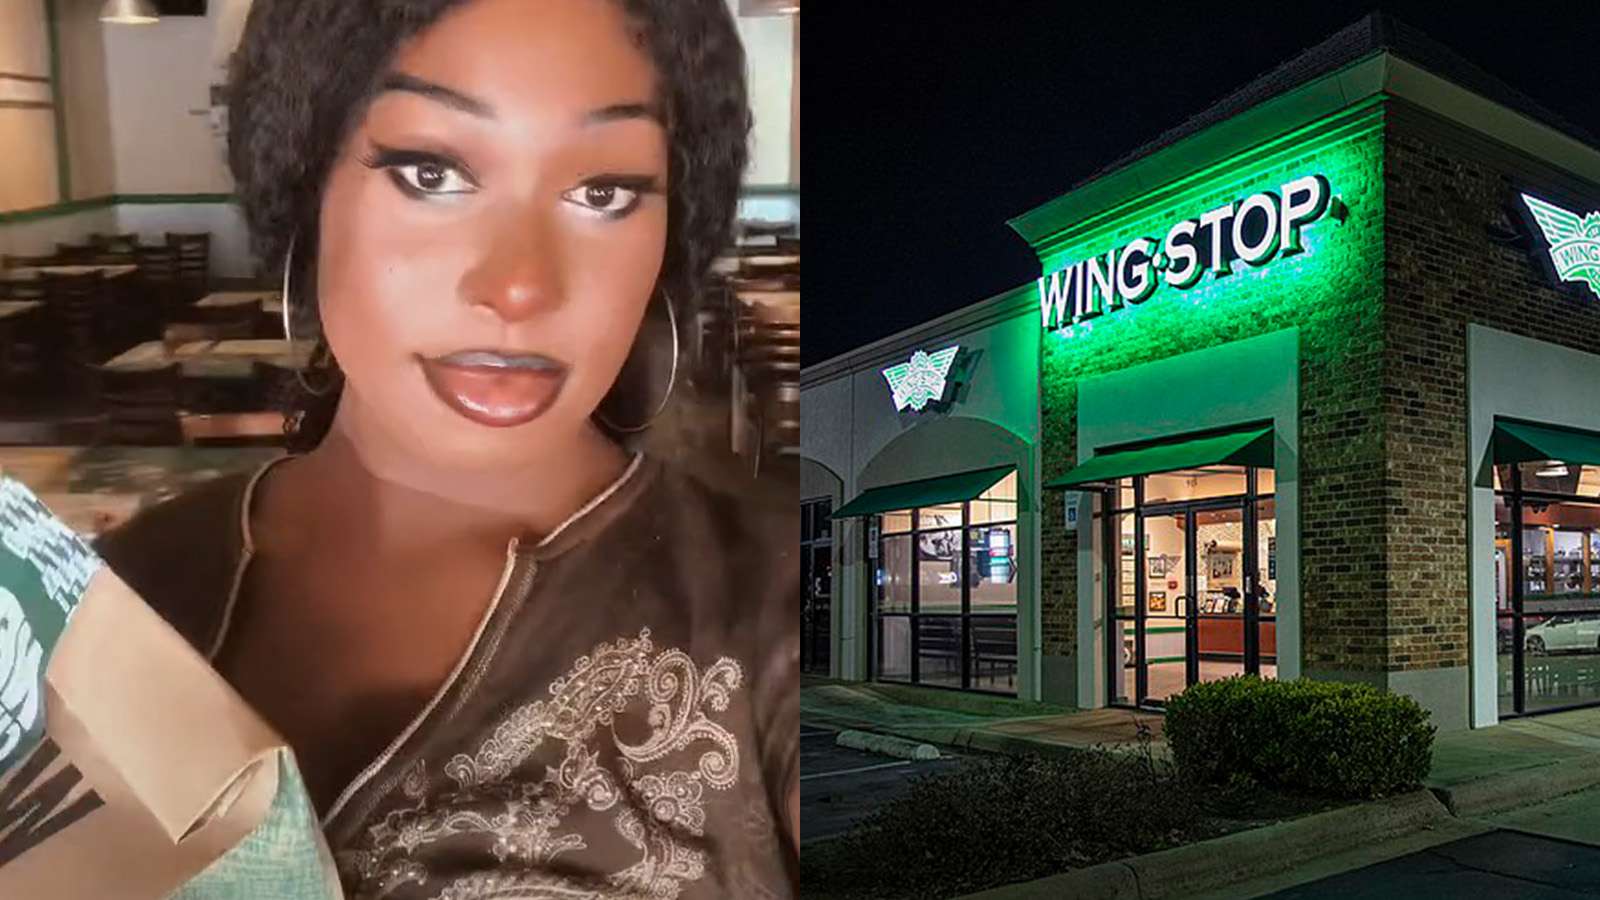 TikToker claims wingstop locked her inside for allegedly stealing